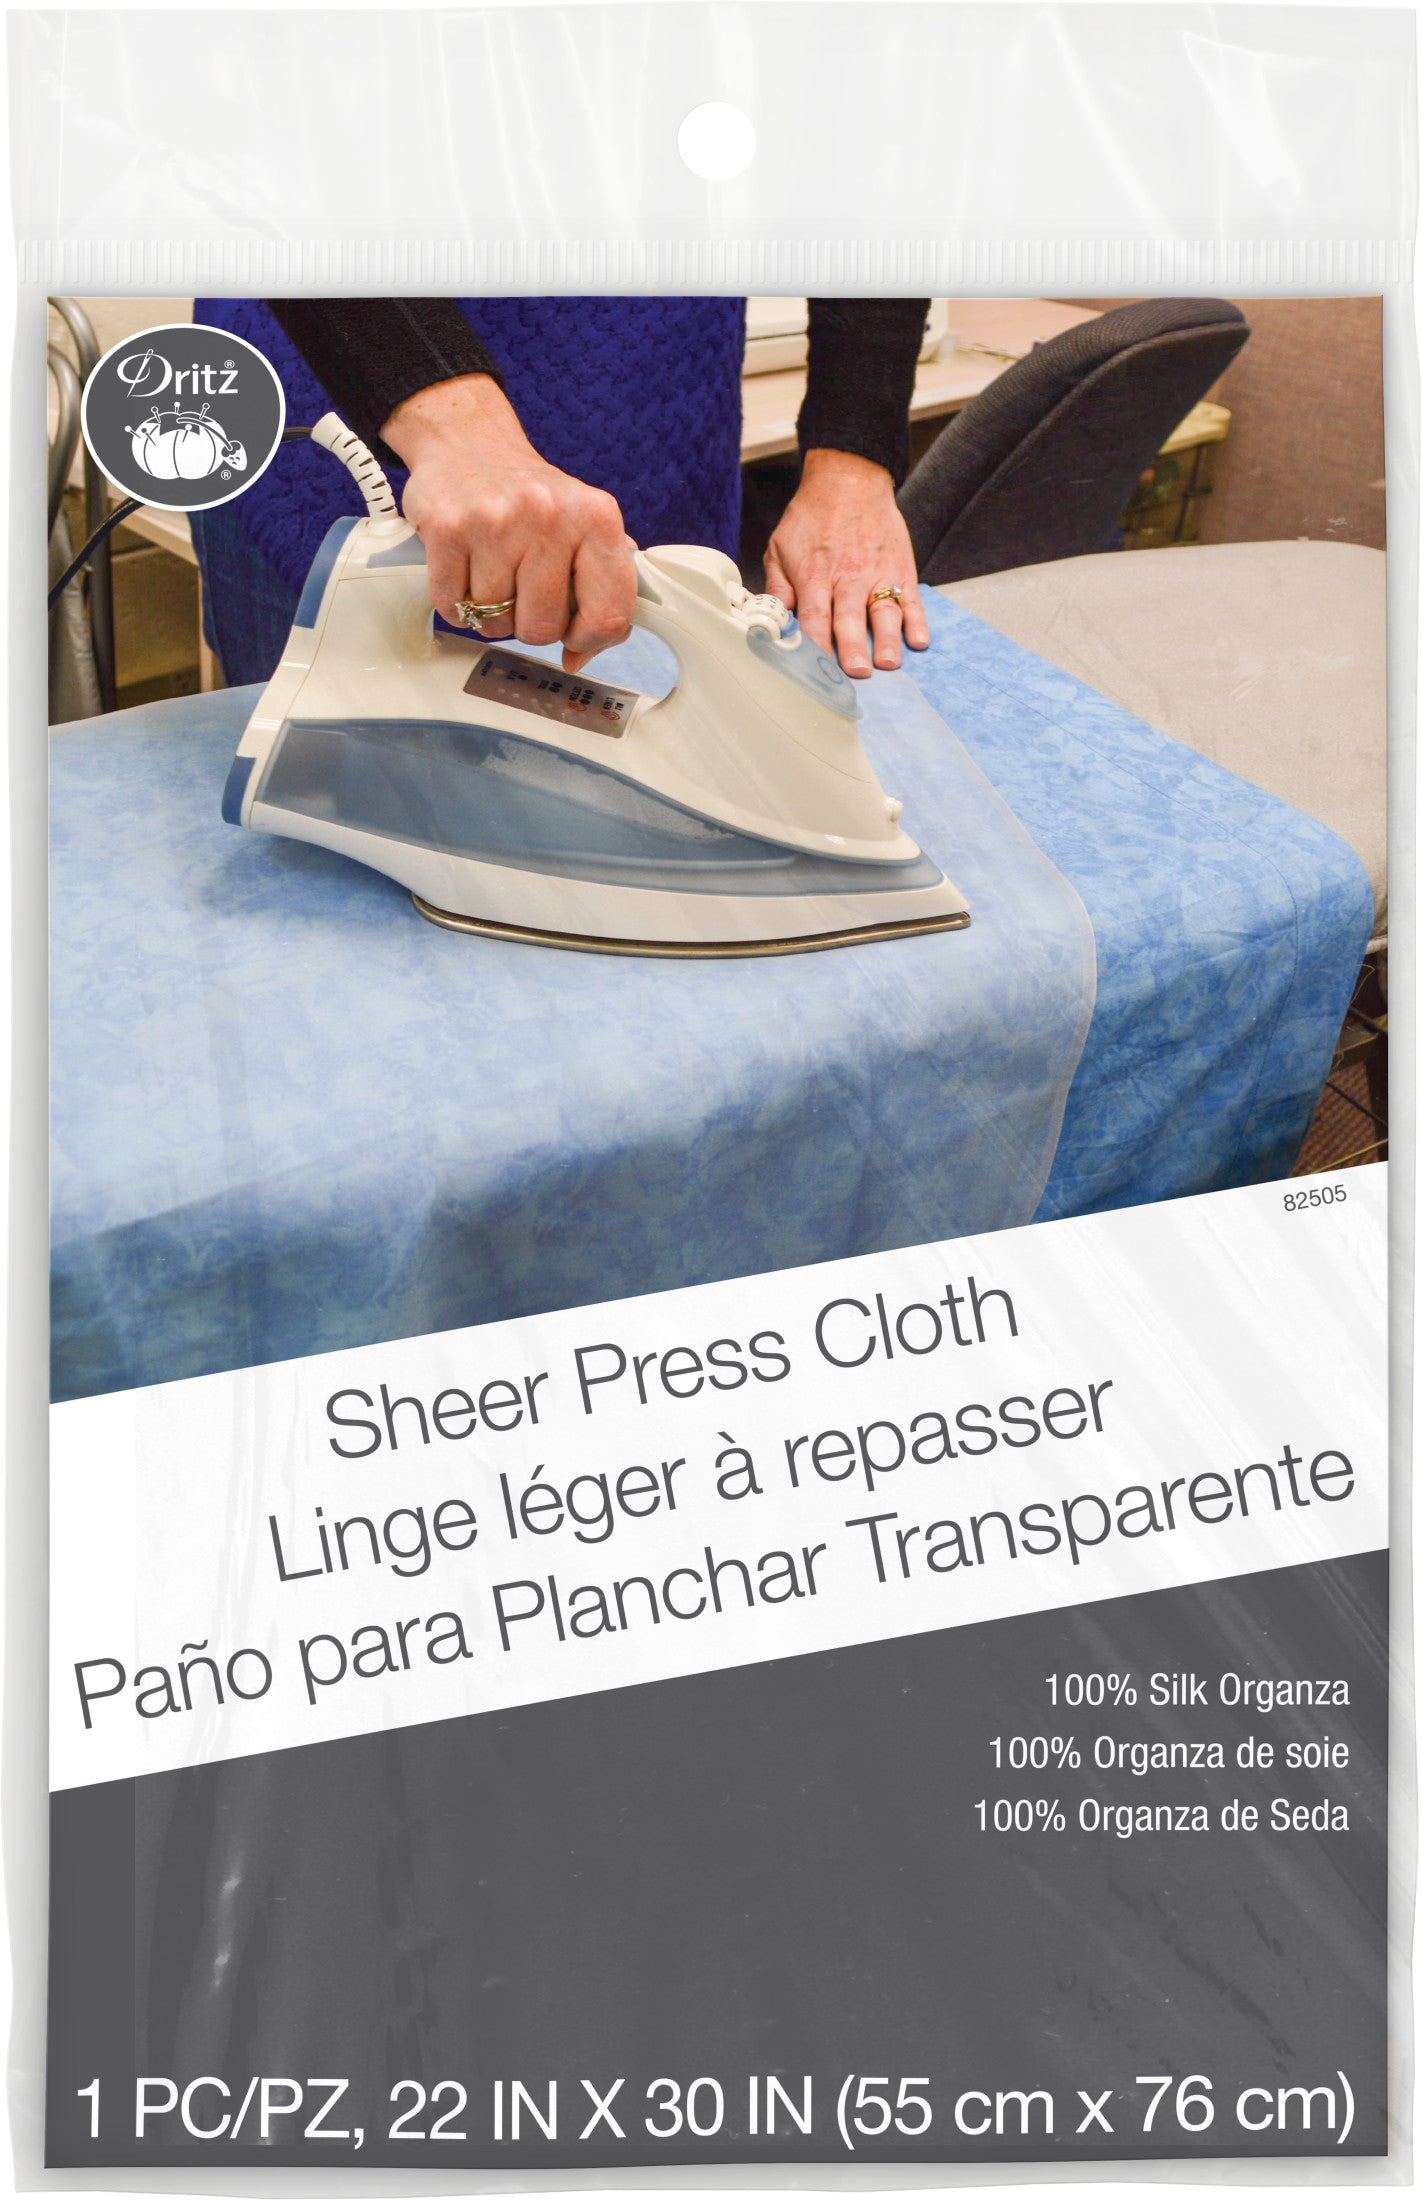 Dritz Sheer Pressing Cloth